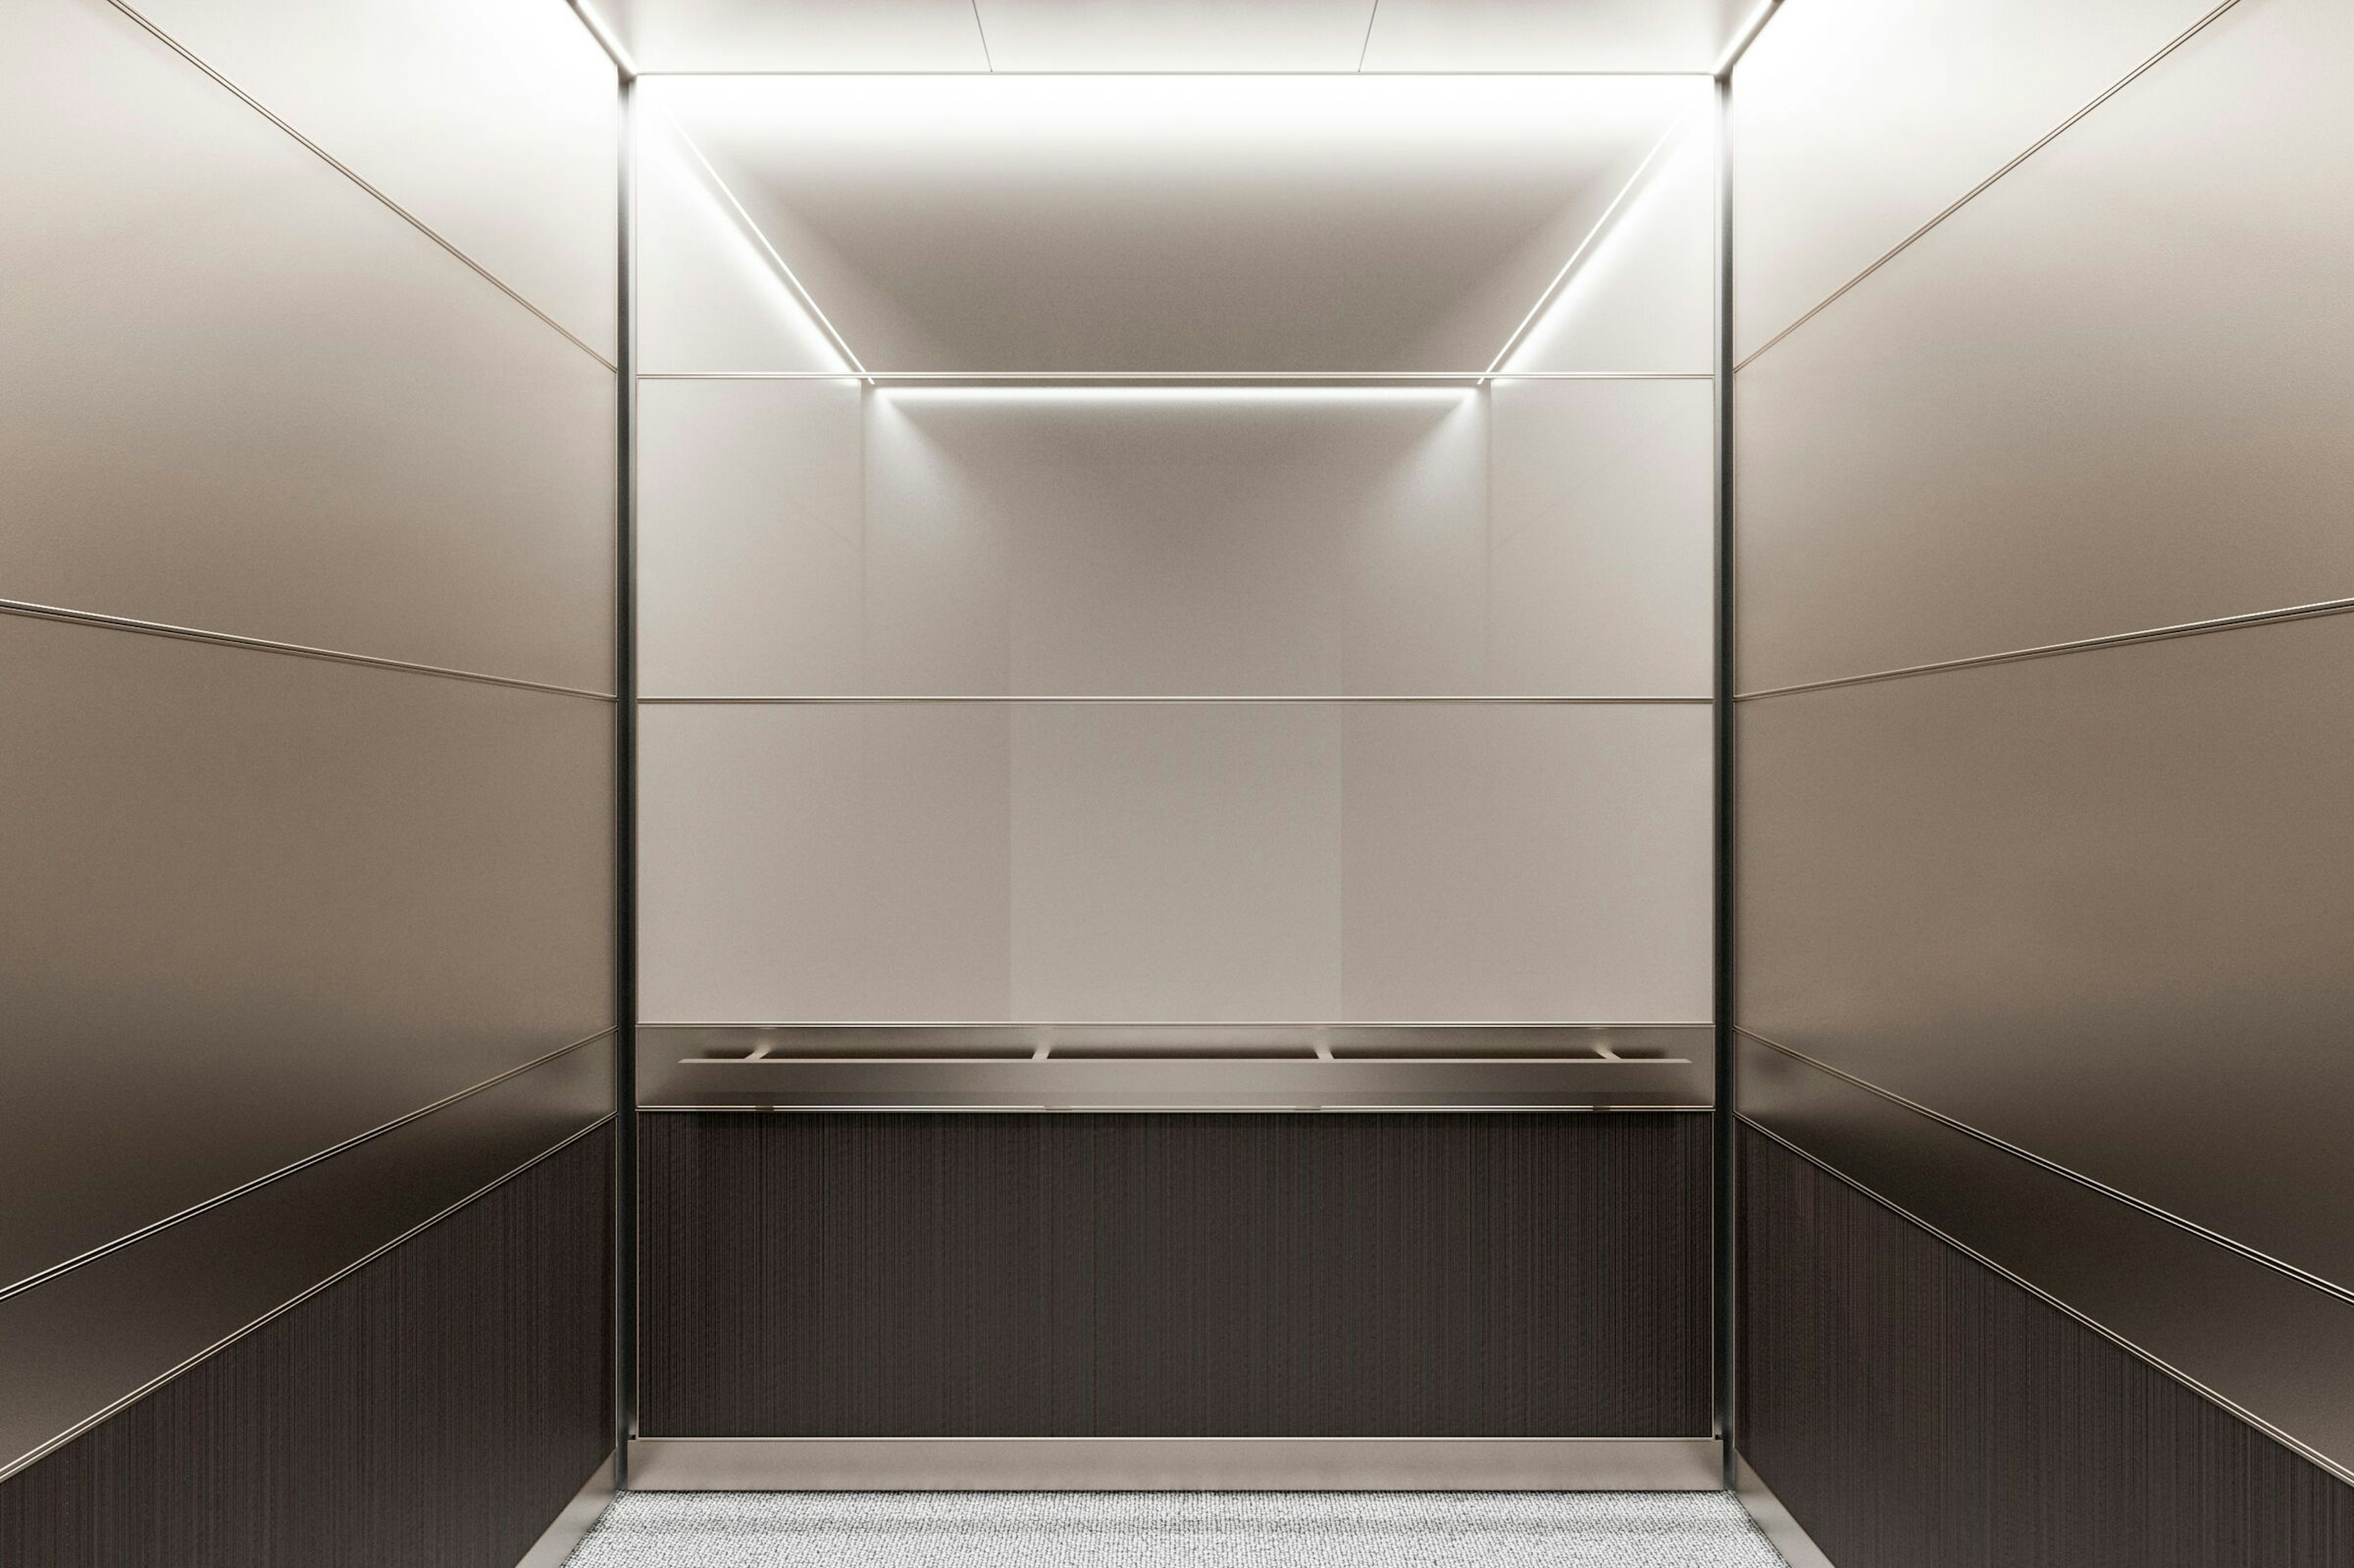 LEVELe Elevator Interiors: undefined